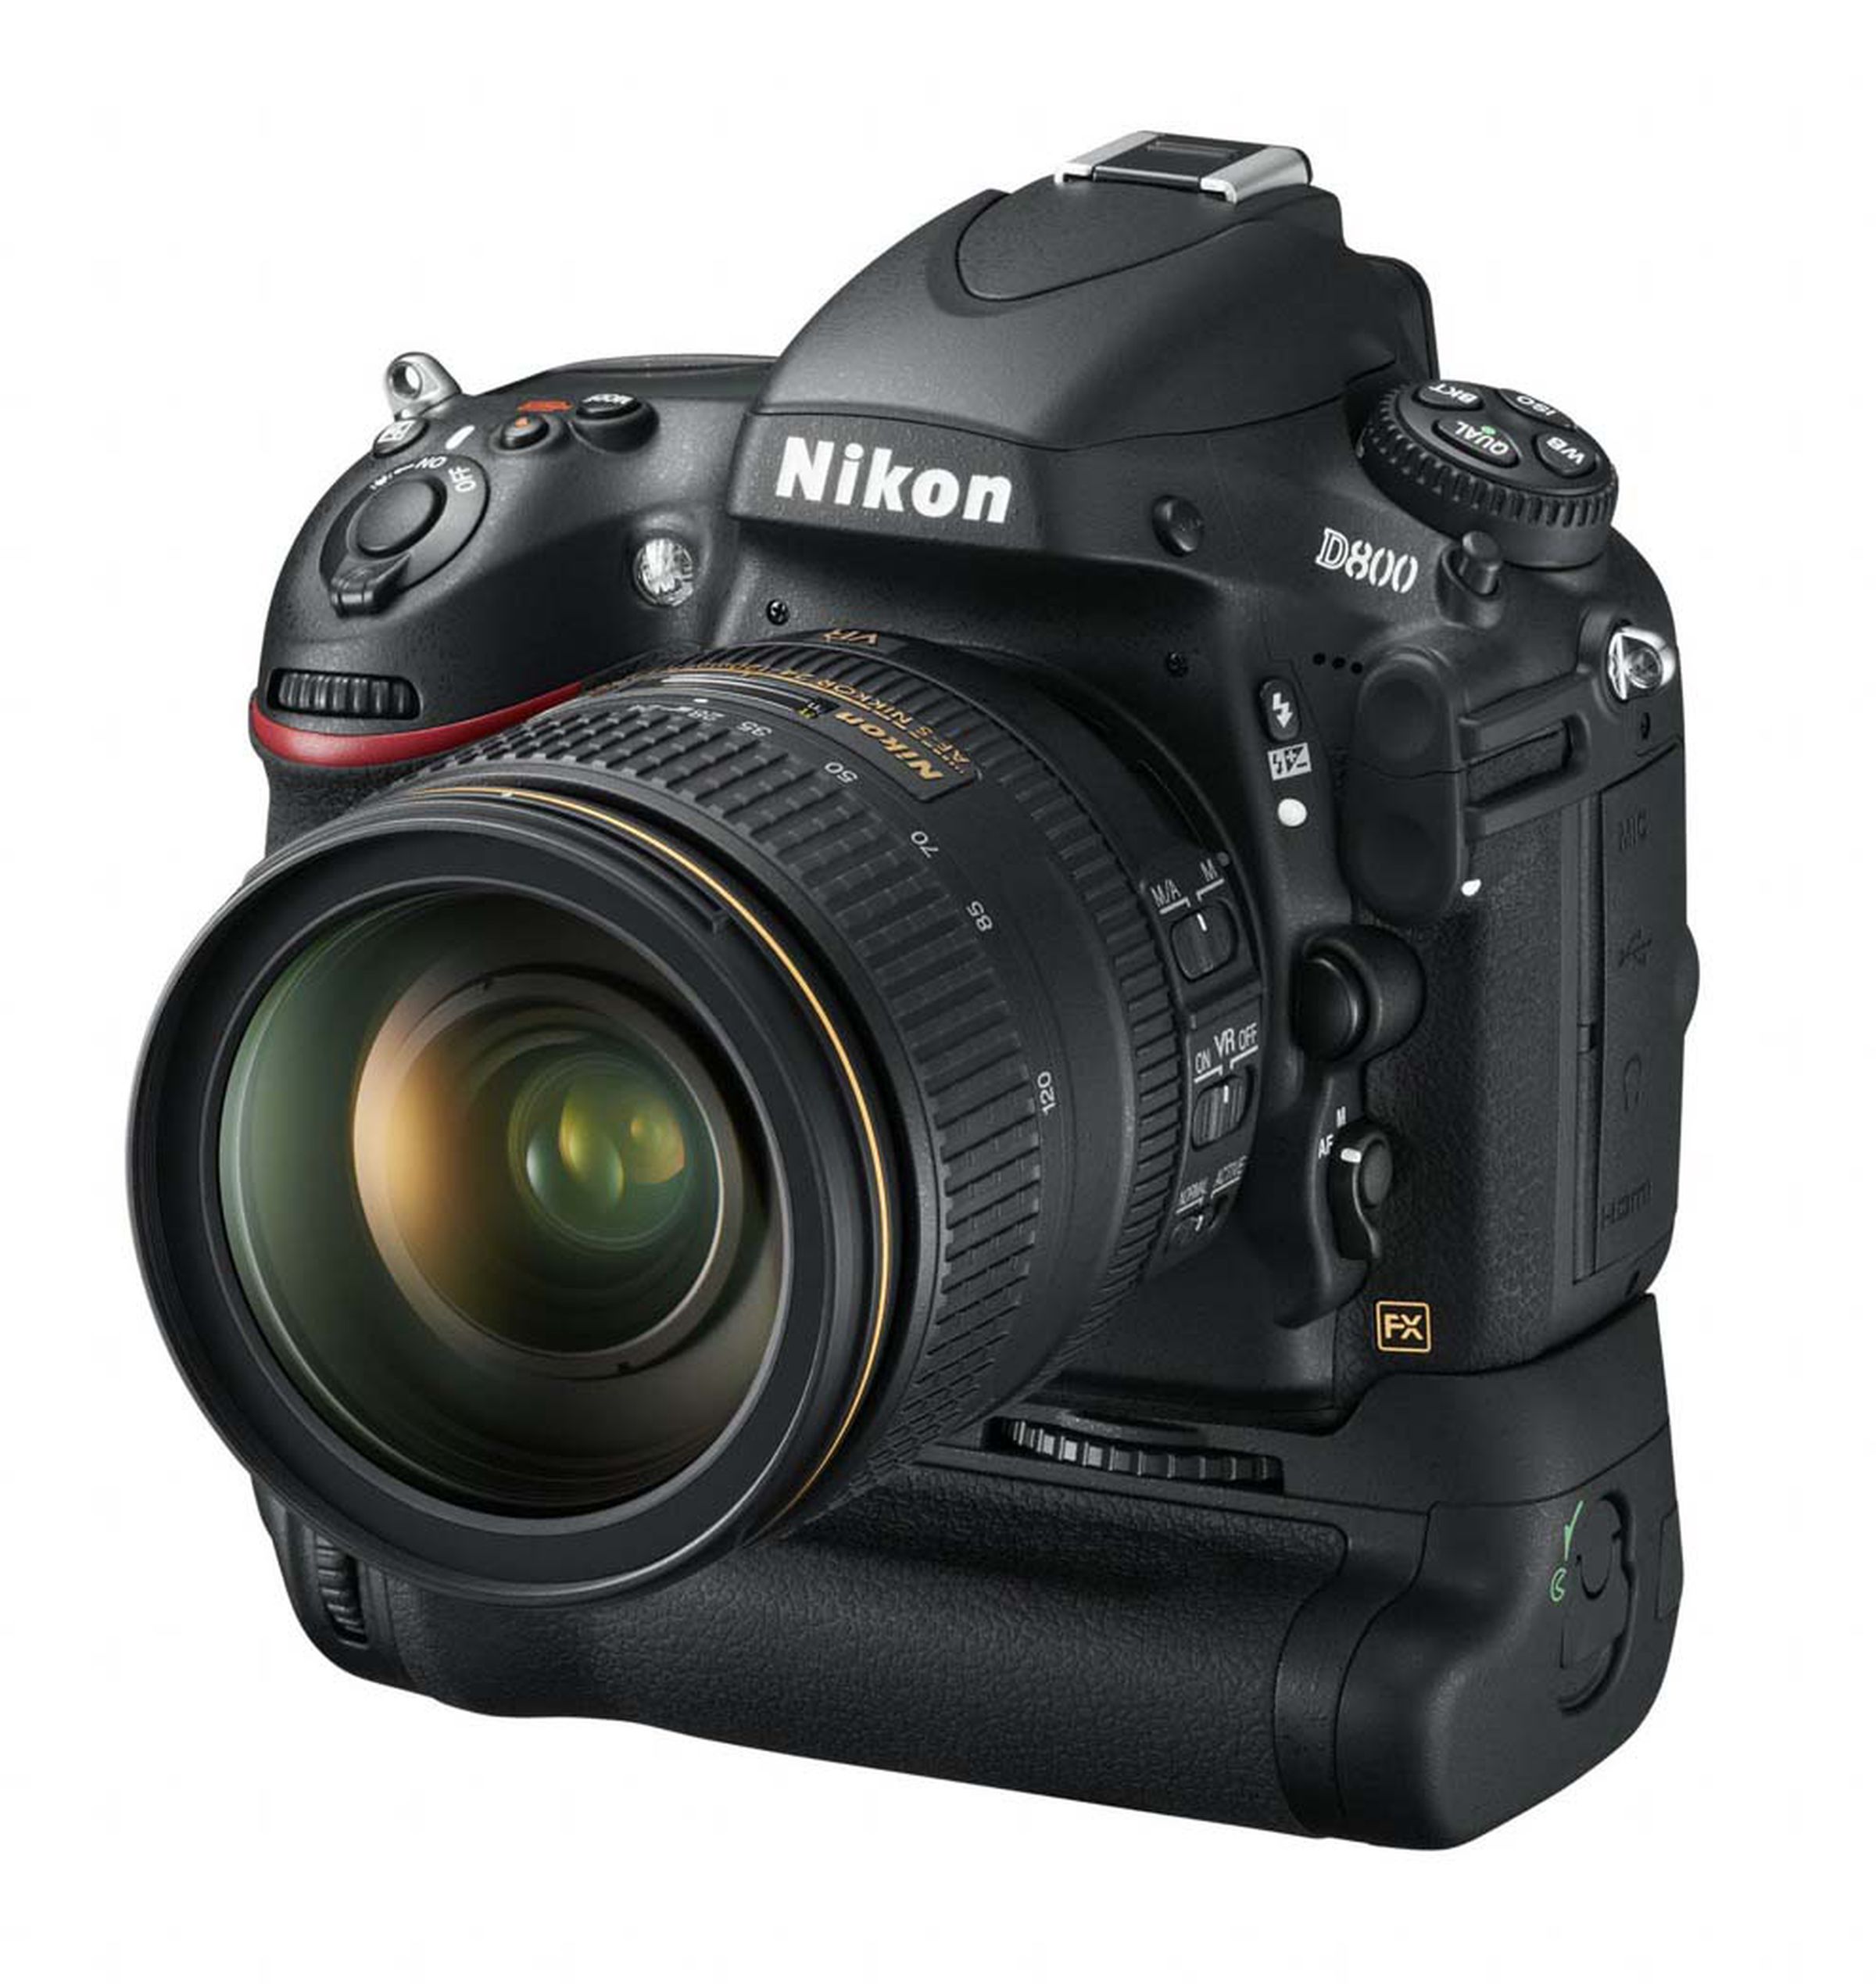 Nikon D800 press image leaks gallery